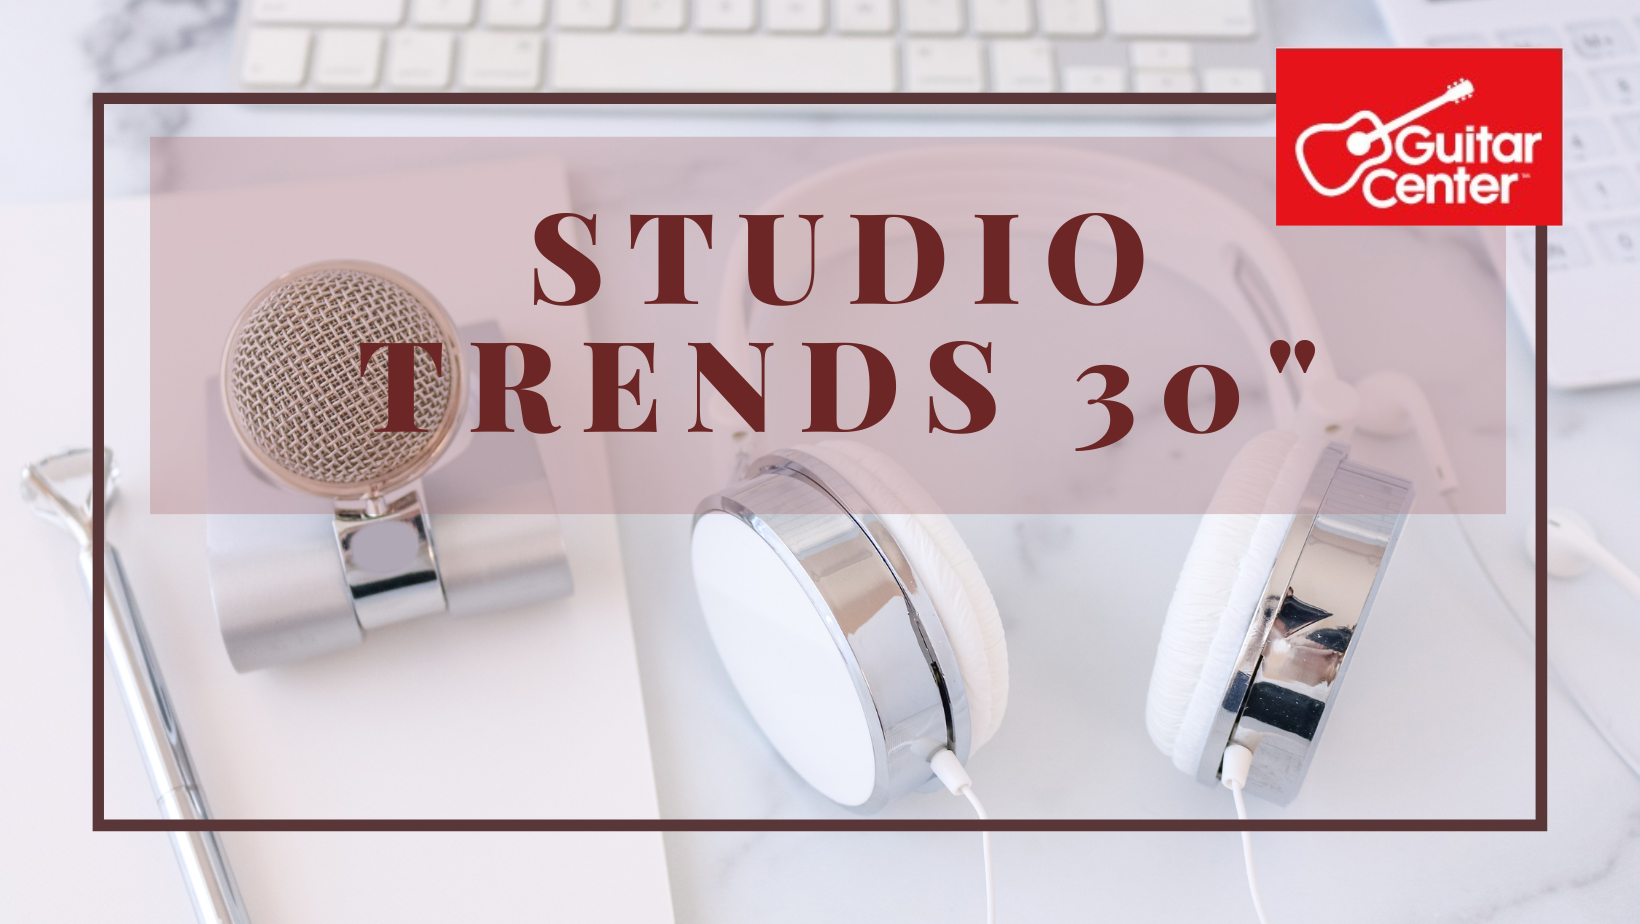 Studio Trends 30” by Guitar Center